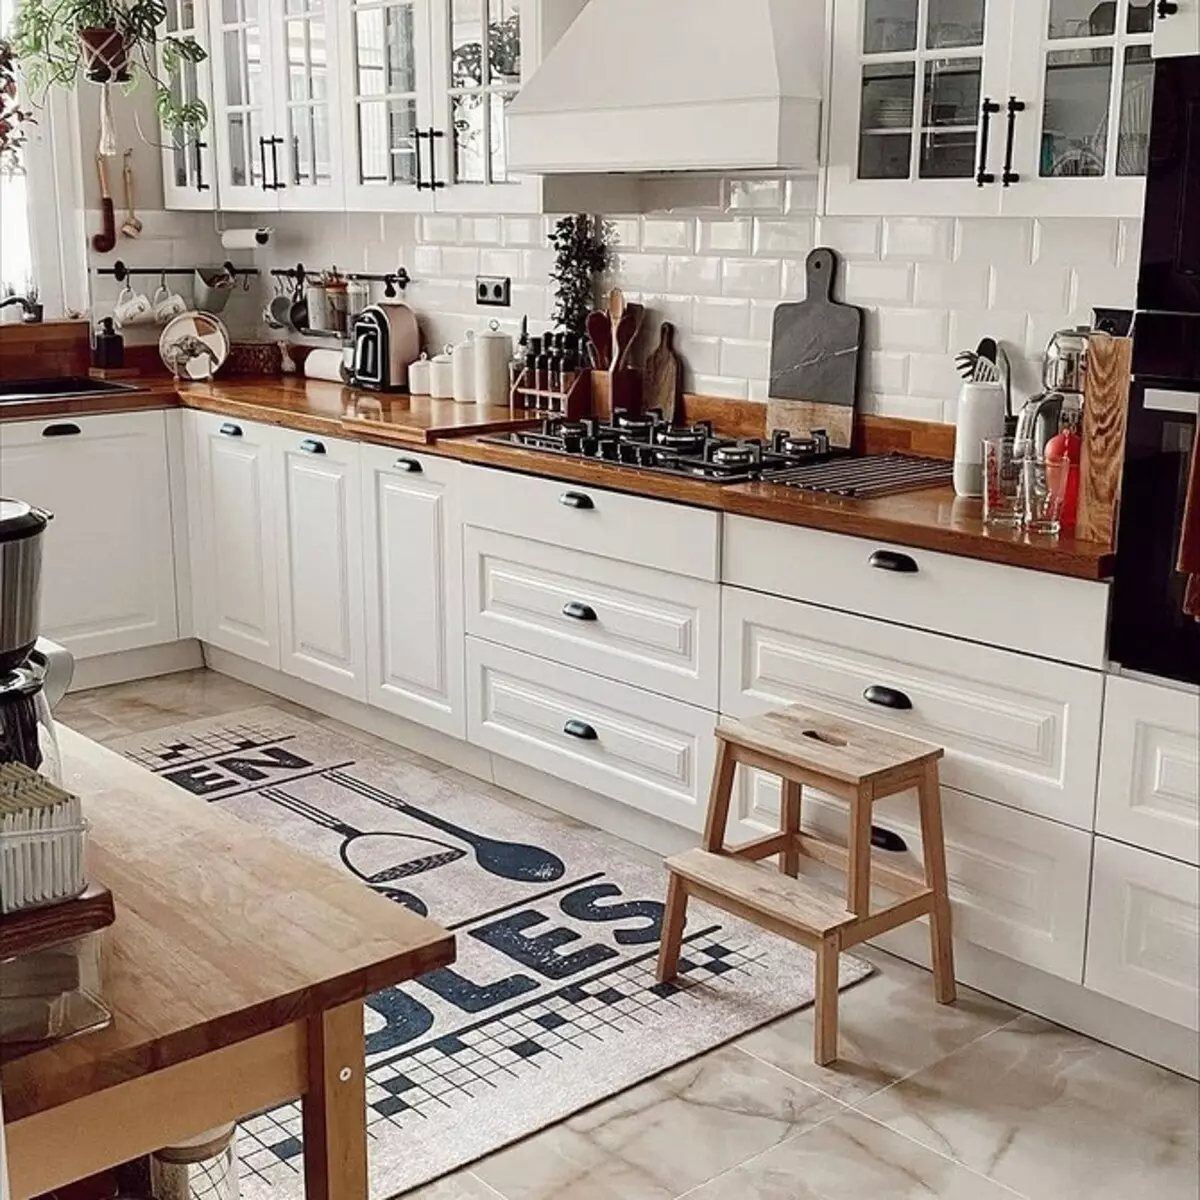 White Kitchen na may Wooden Countertop (42 Photos) 6019_32